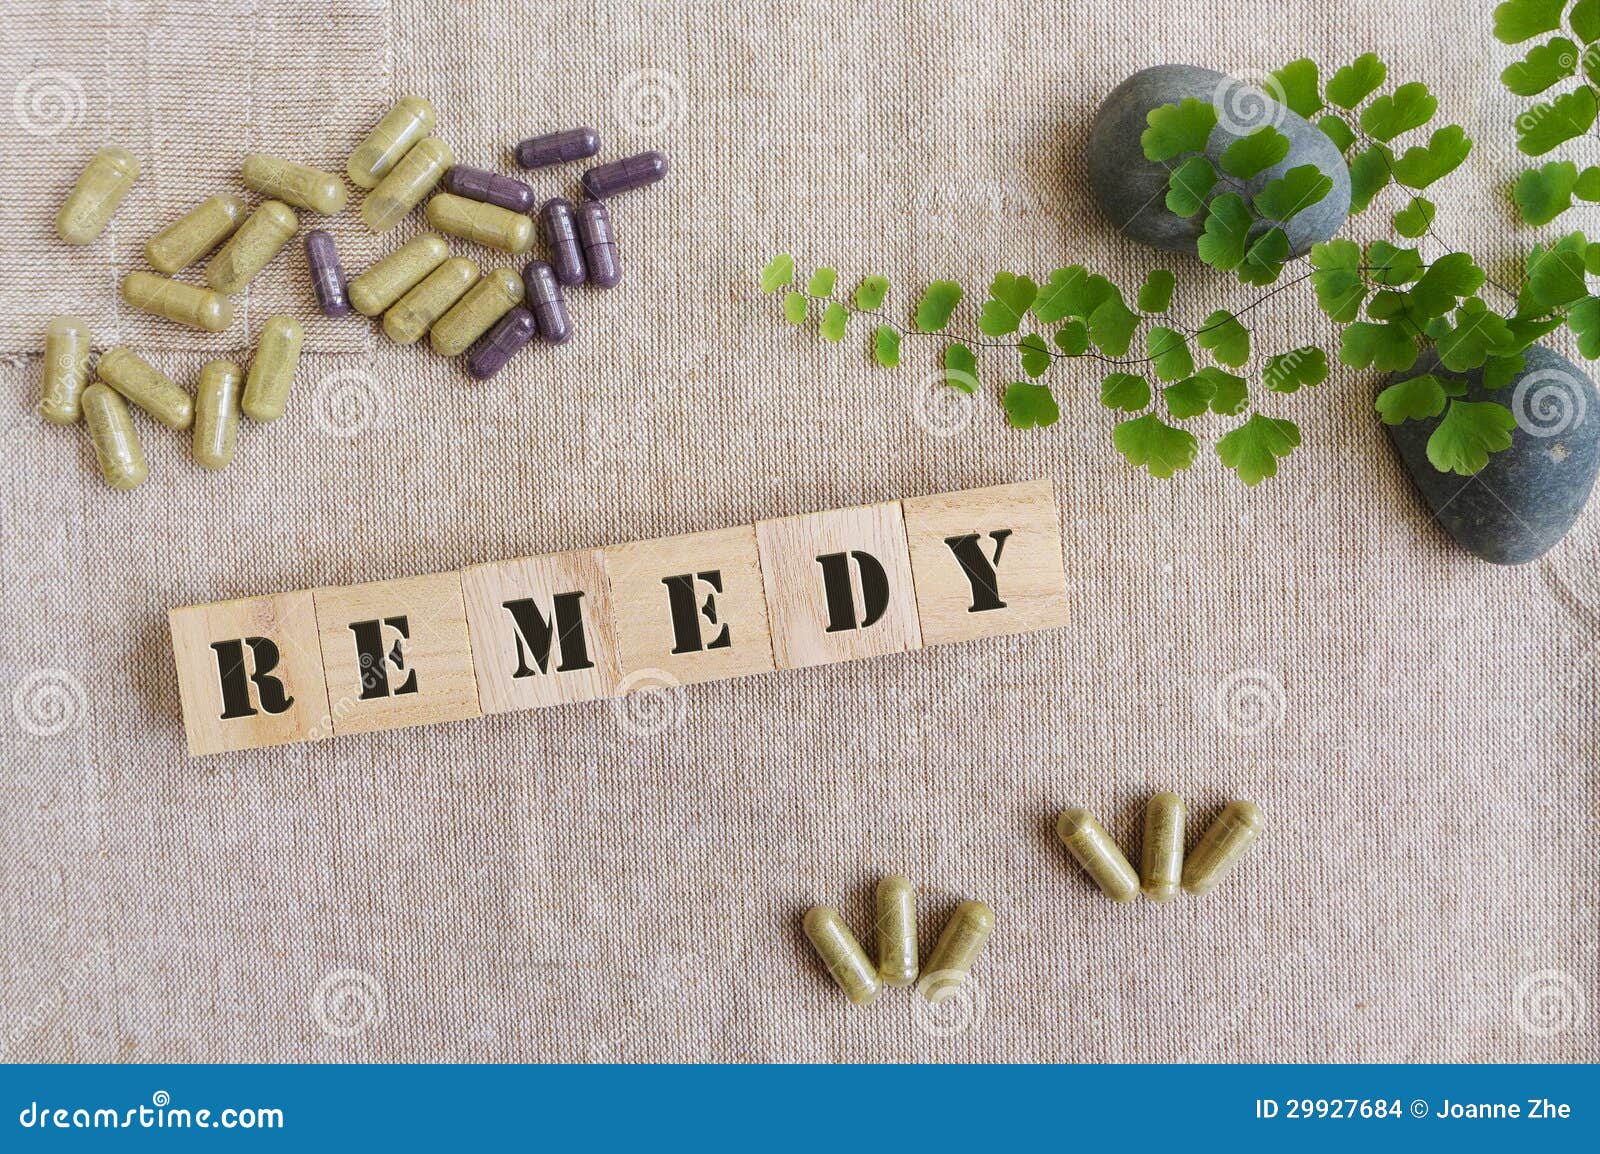 remedy medicine concept